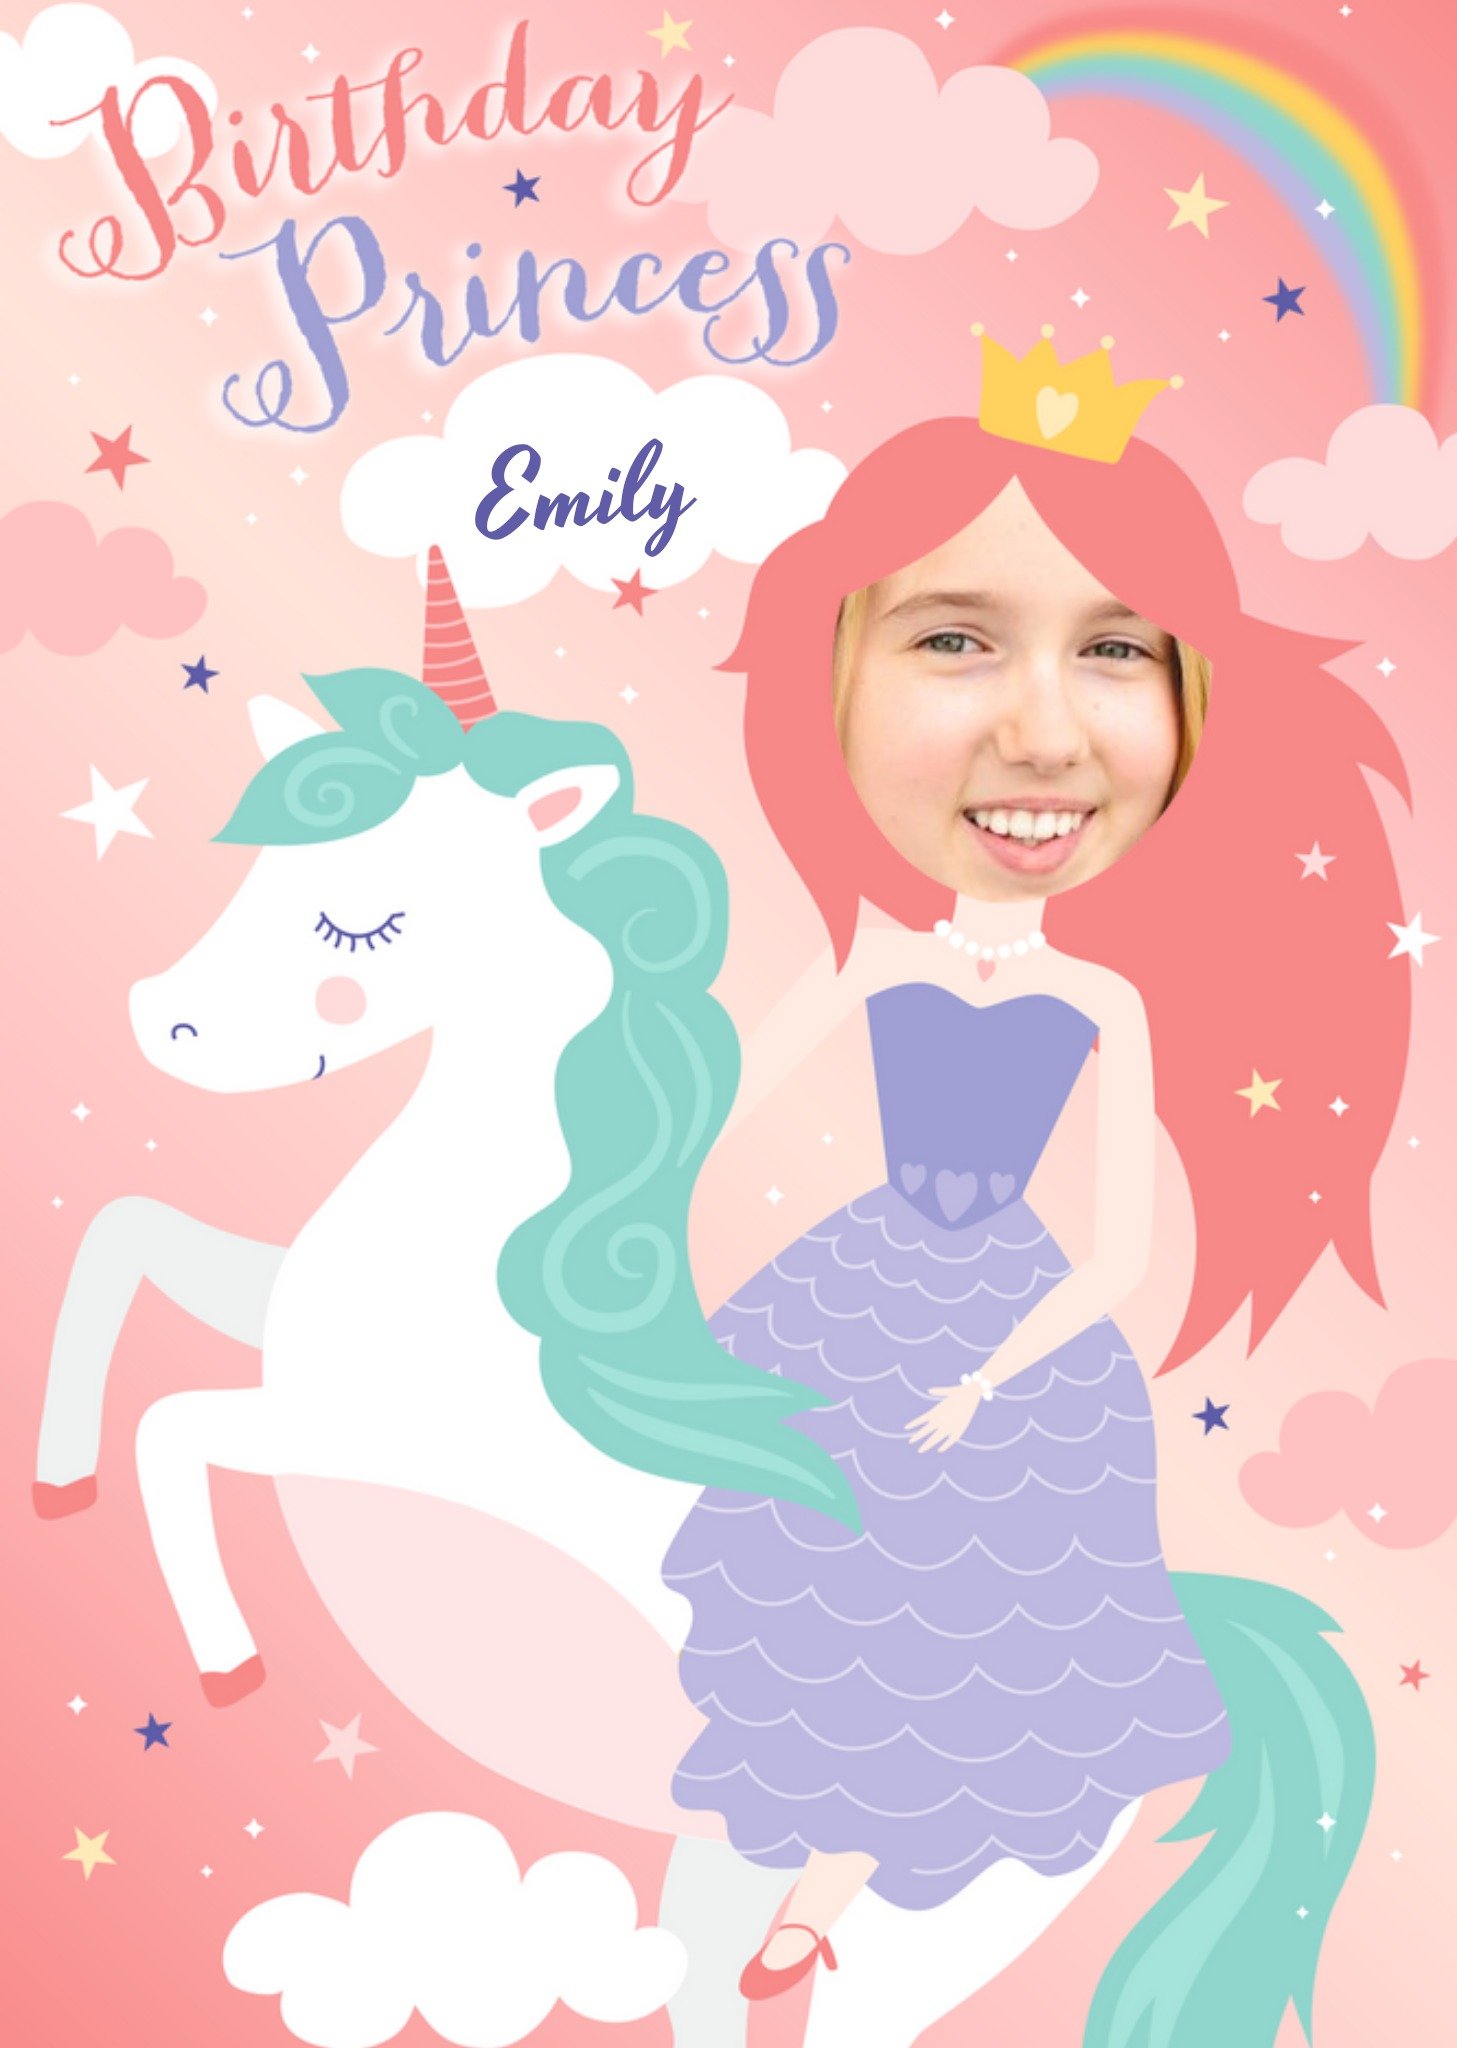 Moonpig Princess & Unicorn Birthday Card - Use Your Own Photos To Make The Recipient A Princess, Lar